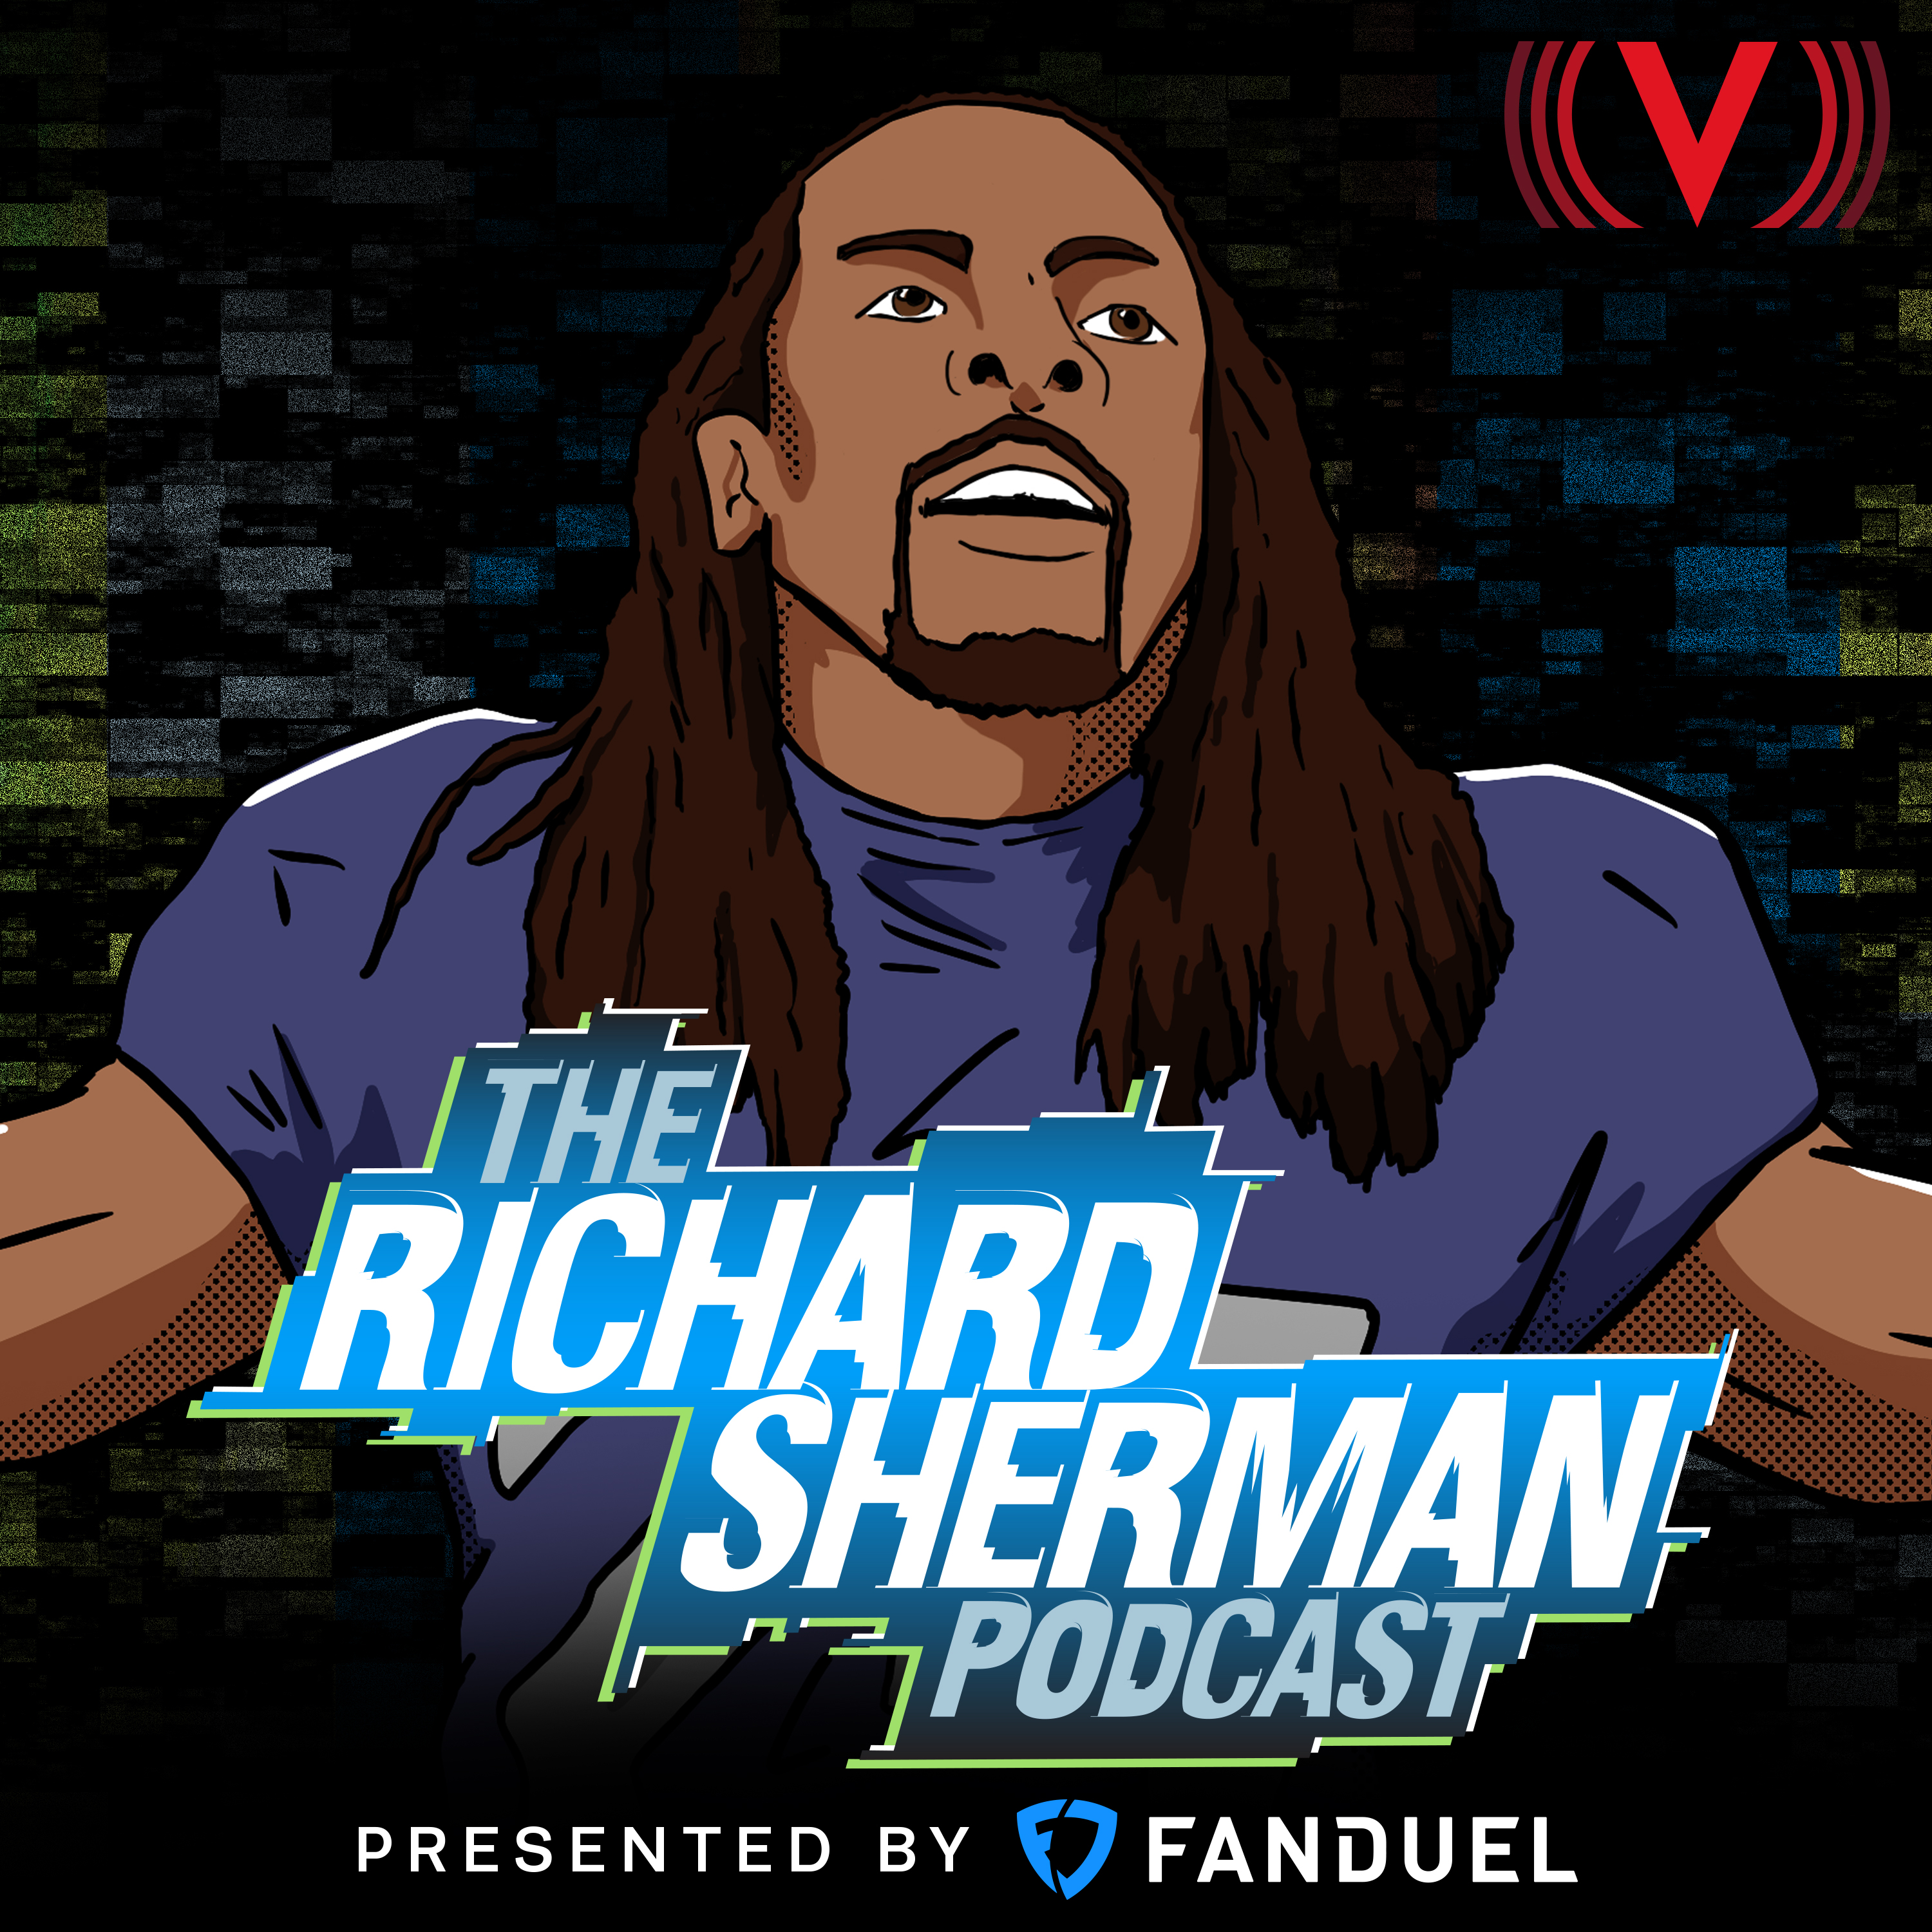 The Richard Sherman Podcast - James Bradberry on Chiefs-Eagles Super Bowl, 49ers W & Giants revenge game